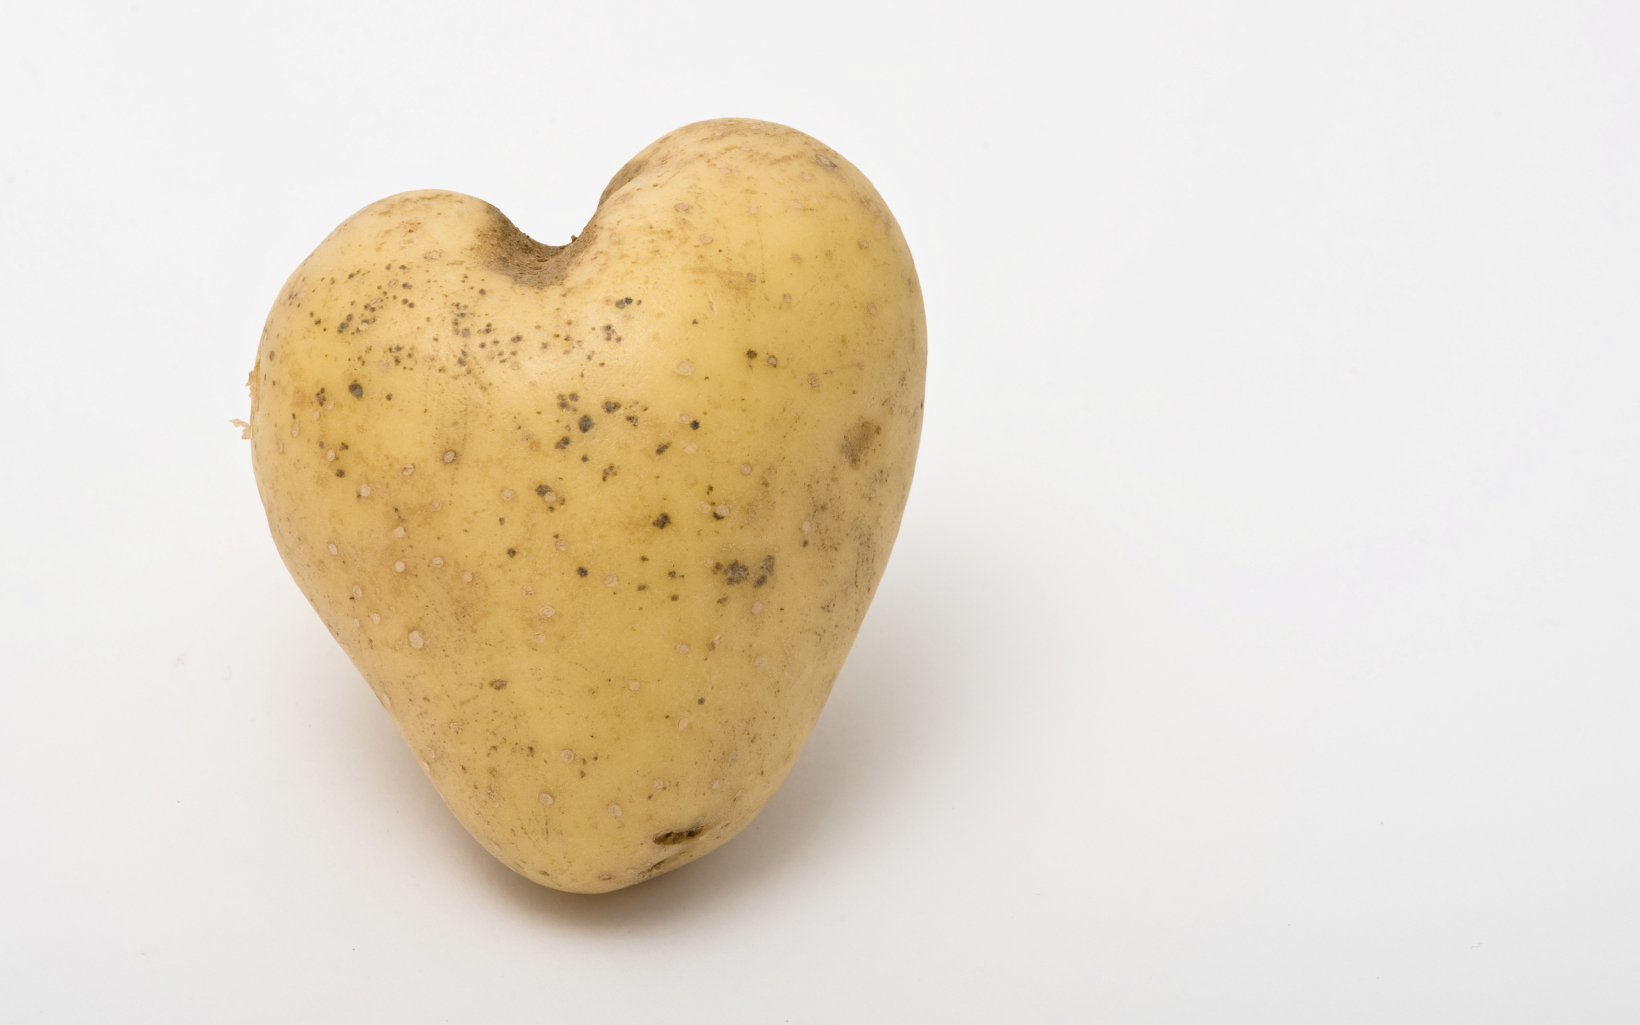 We like potatoes. Картофель сердце. Картошка сердечком. Сердечко из картофеля. Люблю картошку.